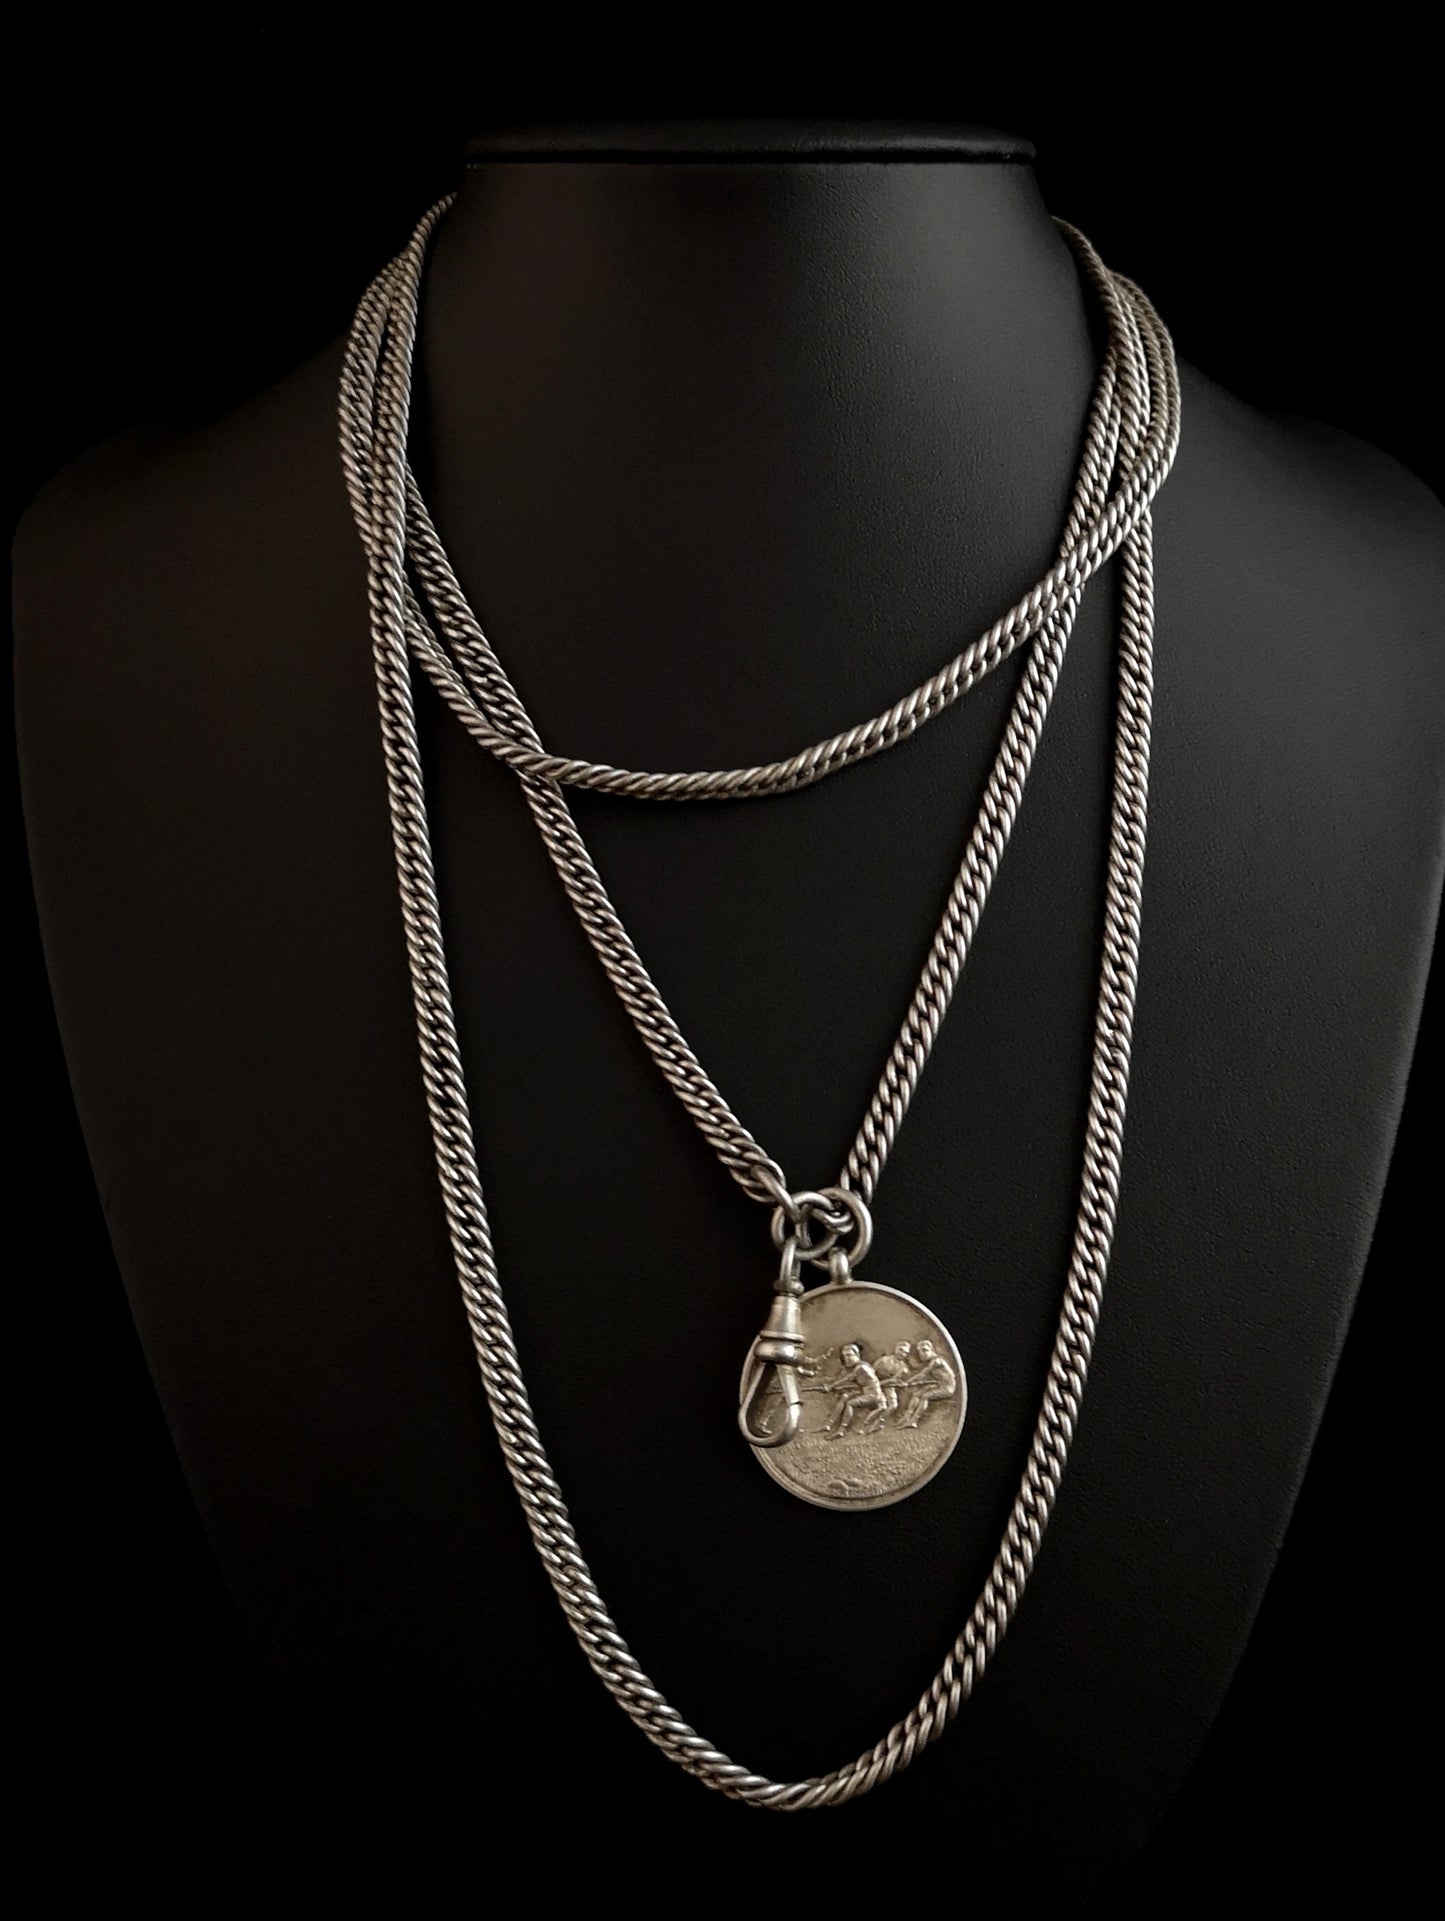 Antique Victorian silver longuard chain, pendant